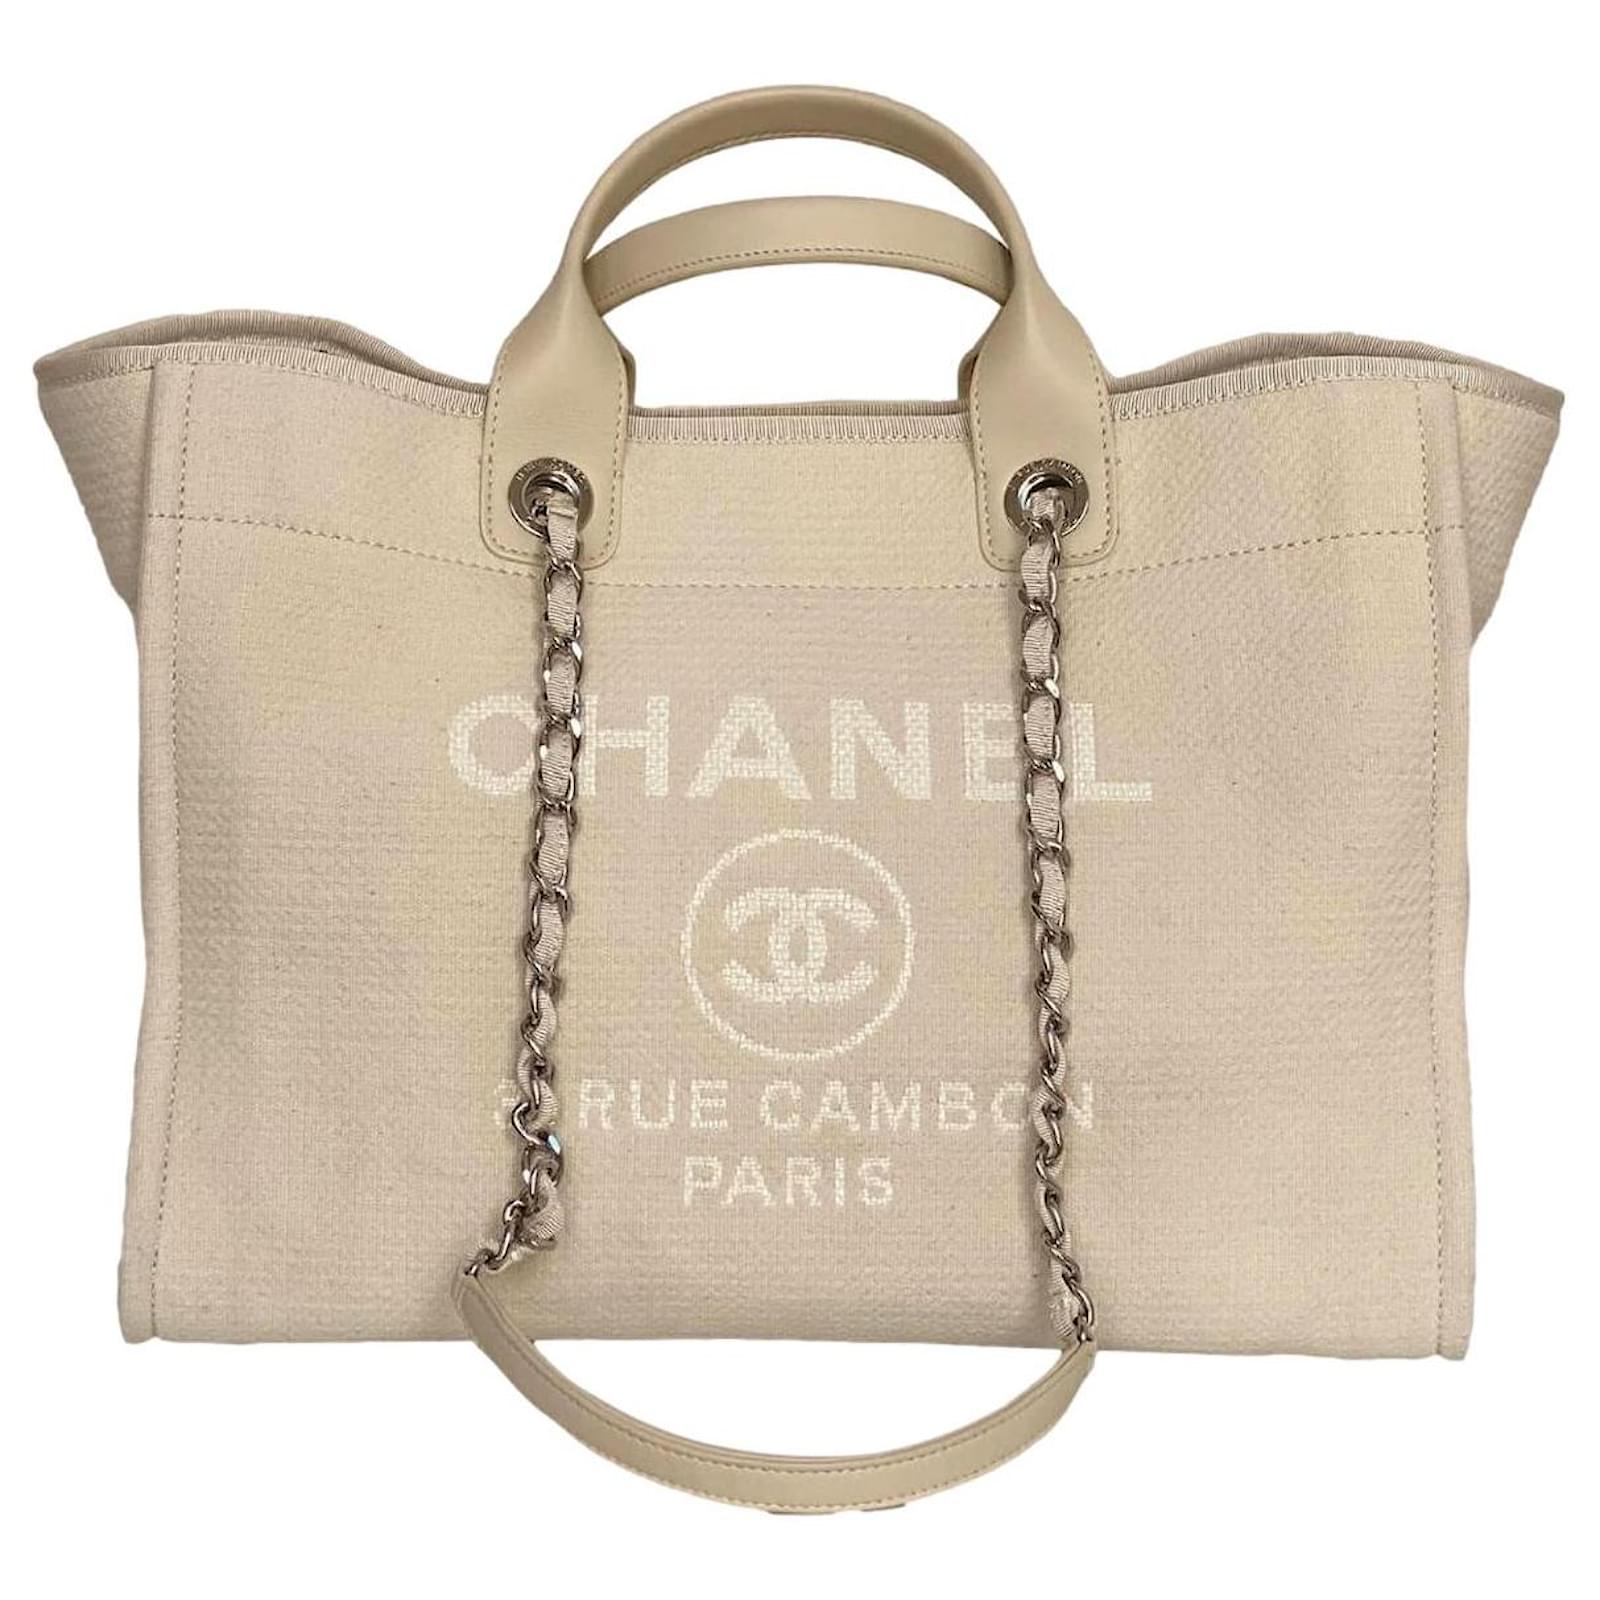 Handbags Chanel Chanel Deauville